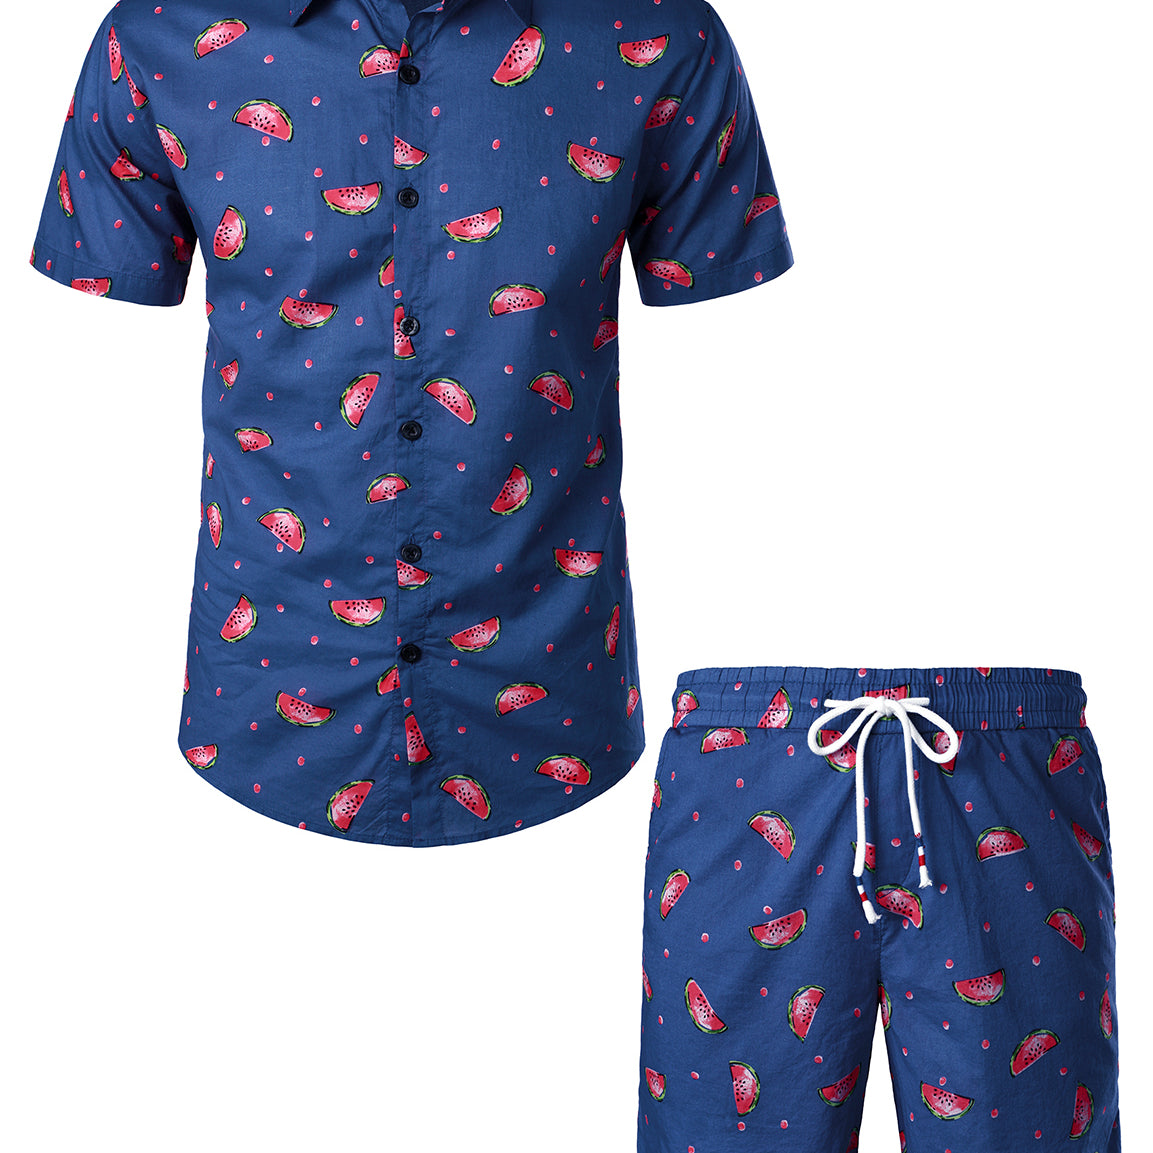 Men's Watermelon Print Cotton Hawaiian Matching Shirt and Shorts Set